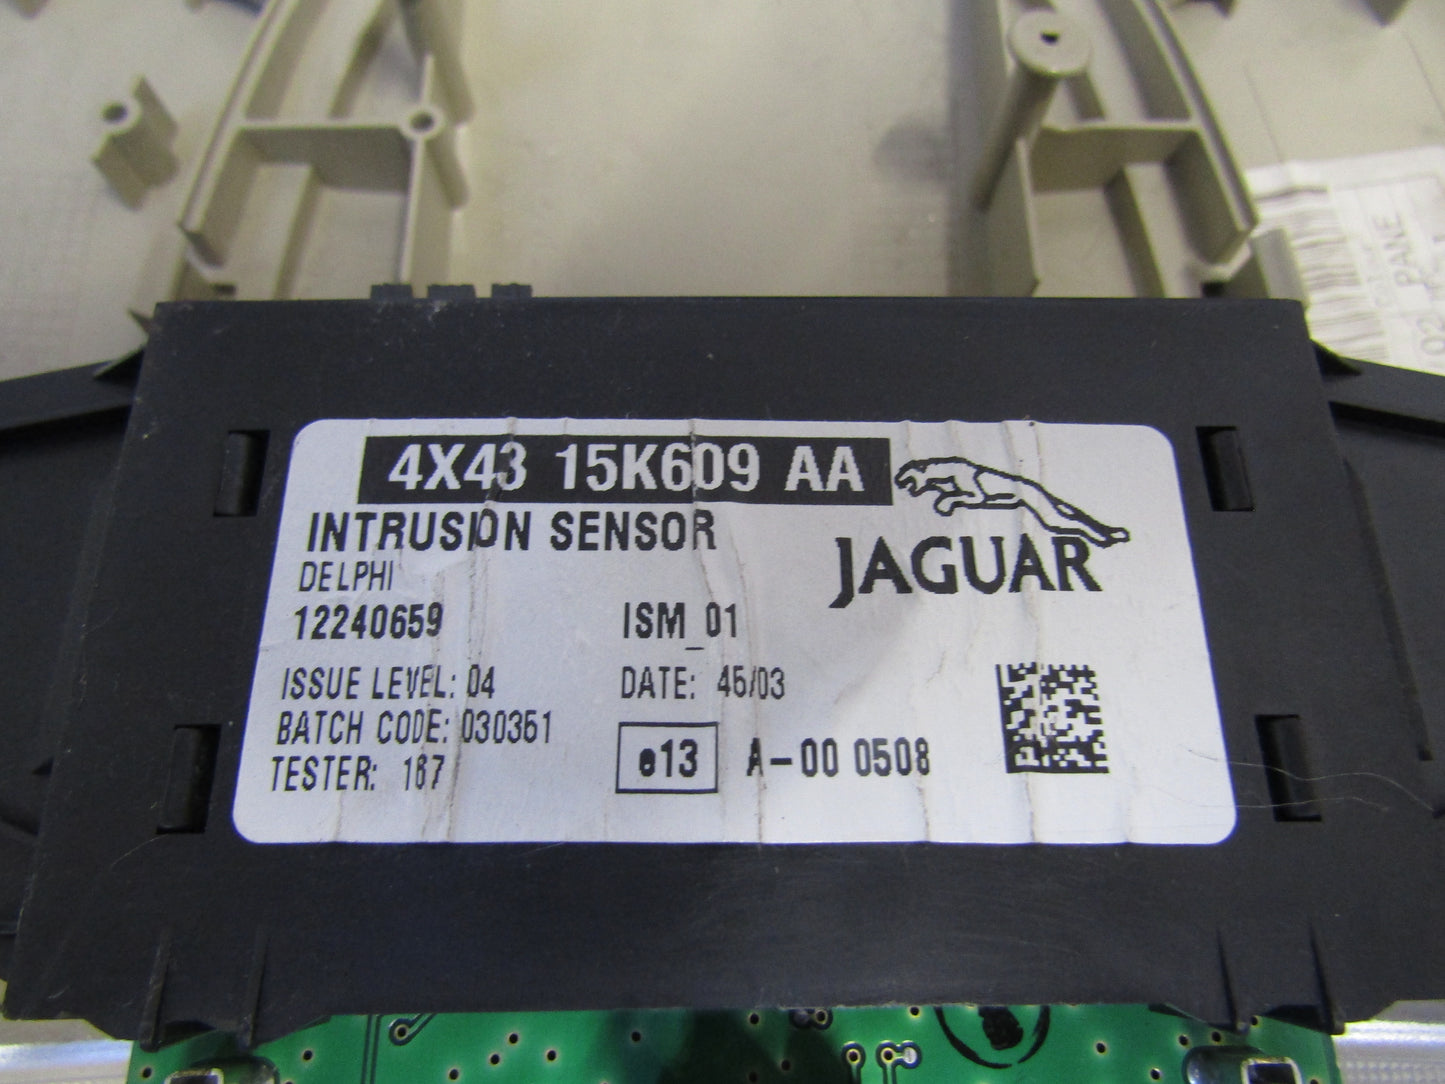 JAGUAR X-TYPE INTERIOR FRONT ROOF READING COURTESY LIGHT 4X4315K699AA